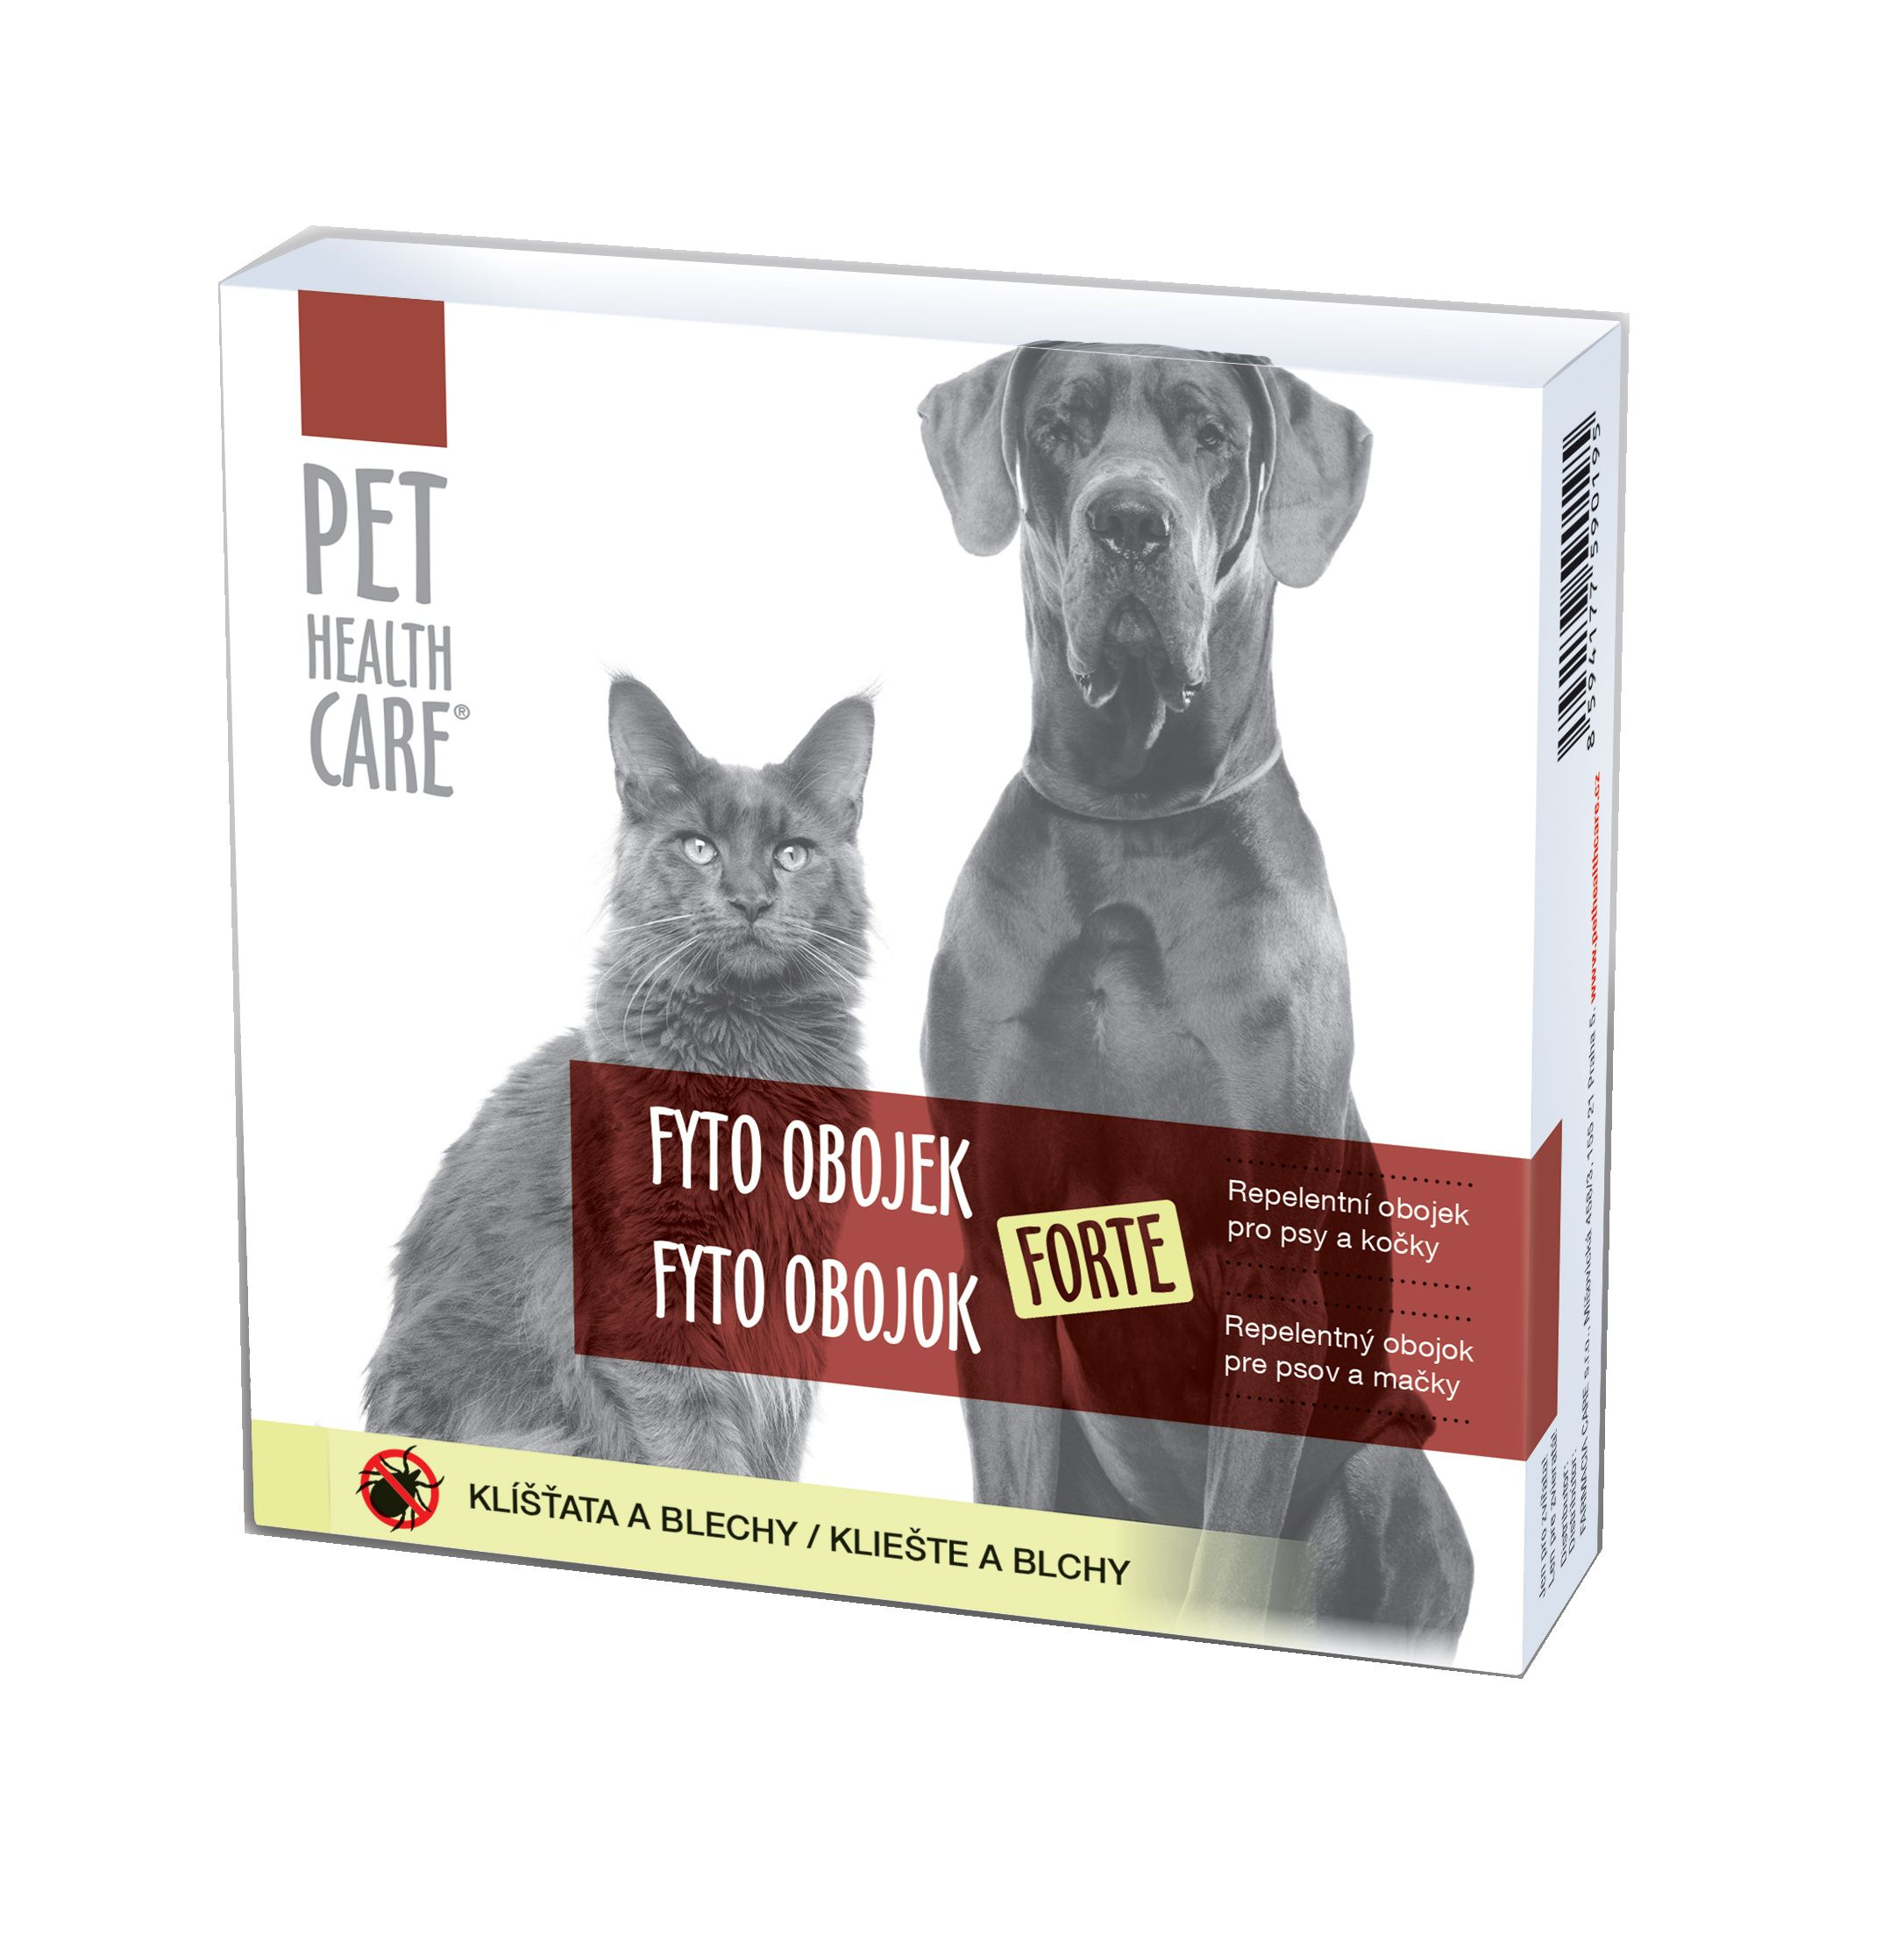 Pet health care Fyto obojek Forte pro psy a kočky 65 cm Pet health care